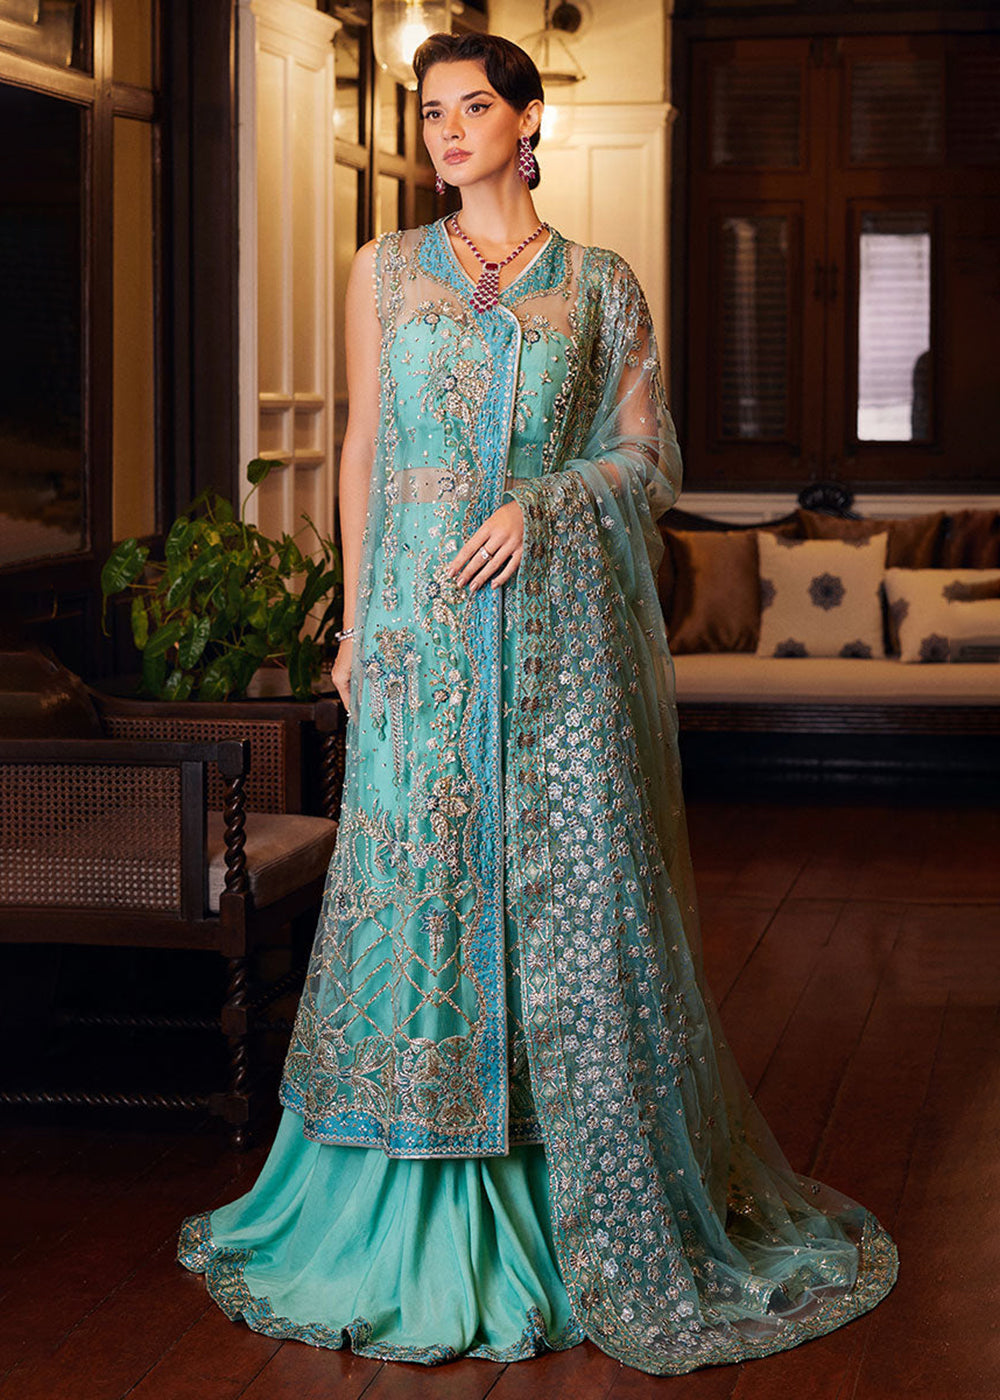 Punjabi Suit Boutique Australia: Find the Perfect Outfit